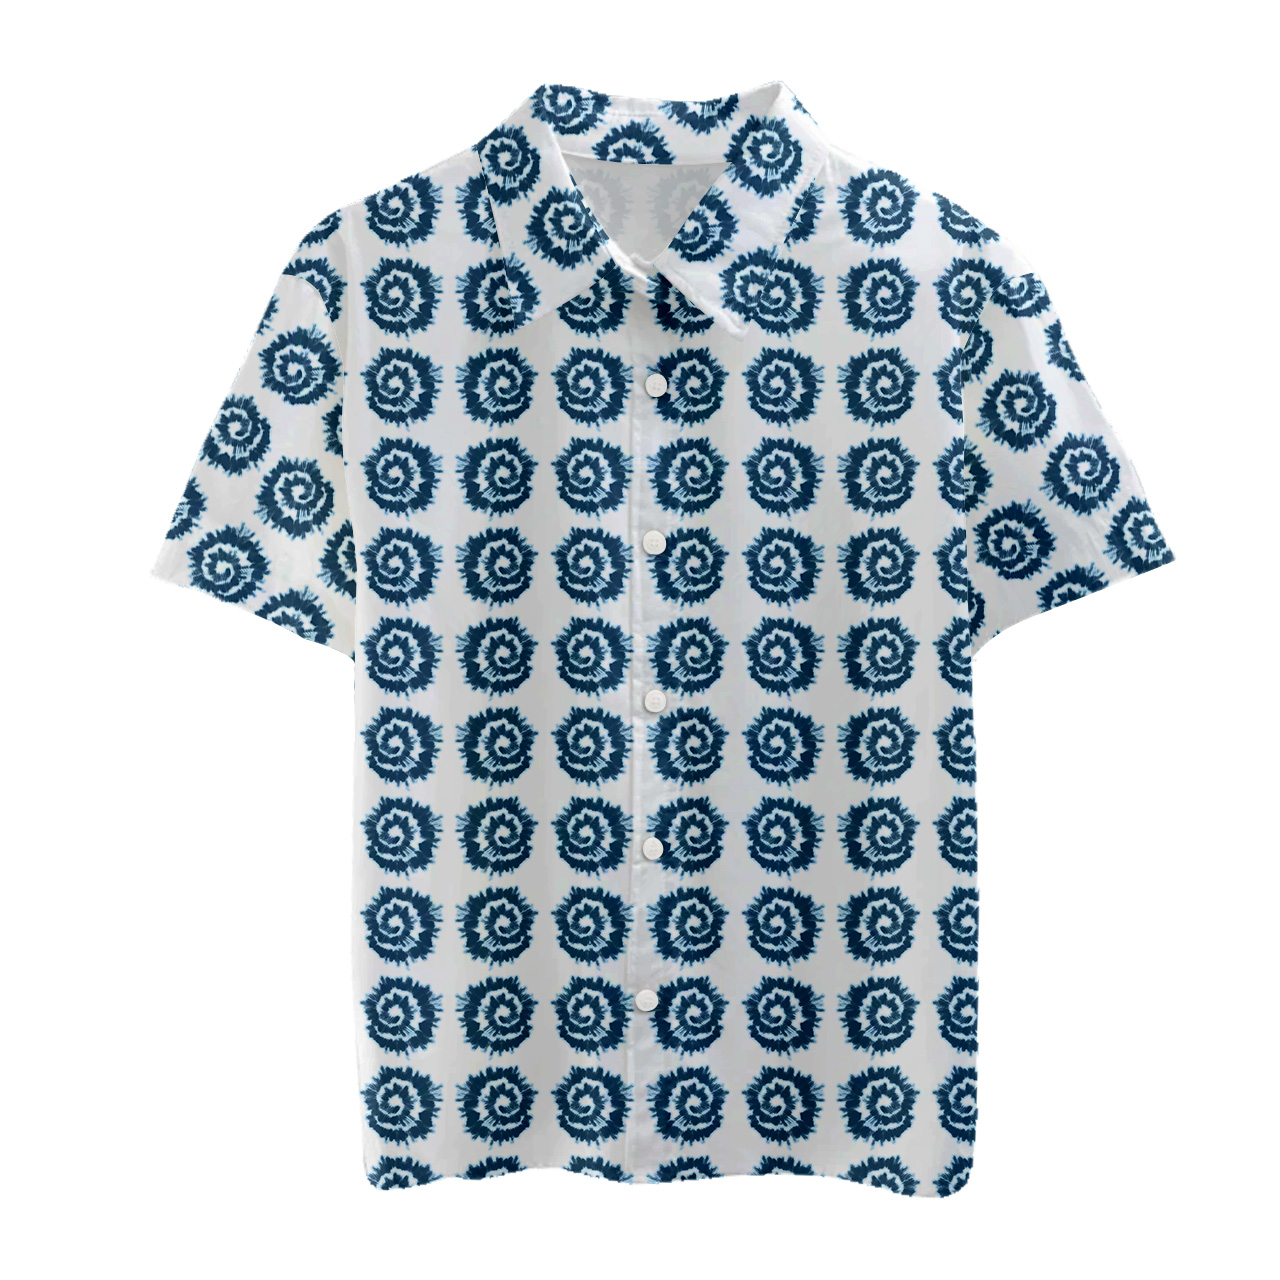 Small Blue Swirl Tie Dye Family Matching Button Shirt